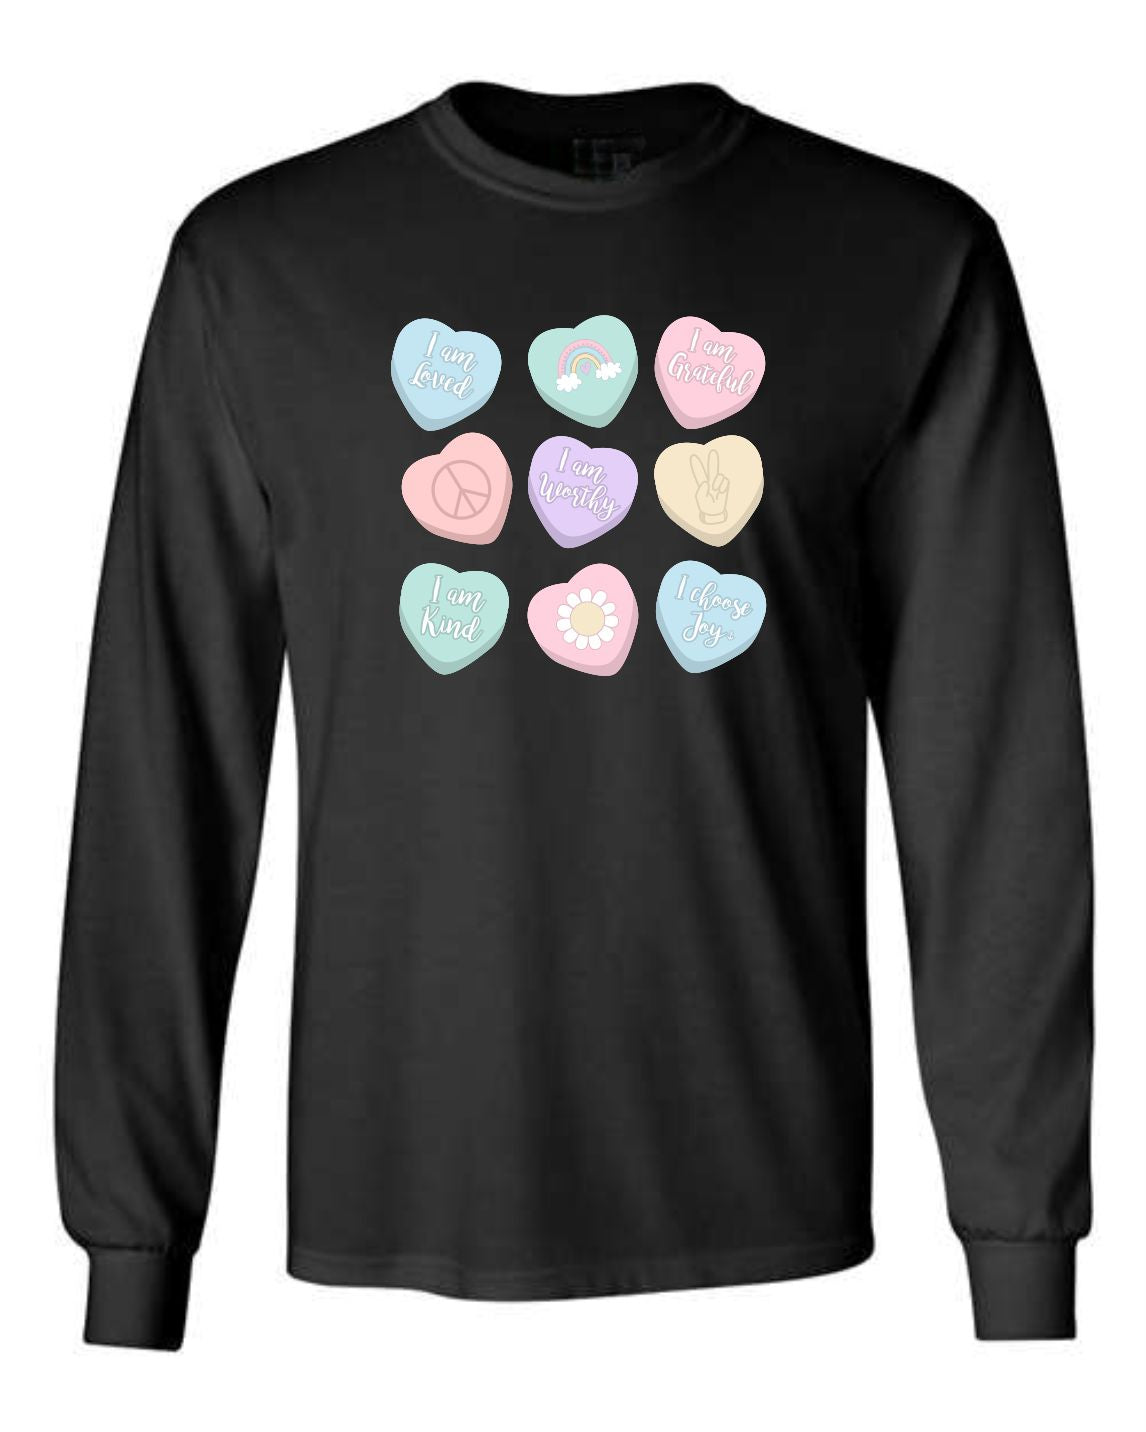 Self Love Candy Hearts Unisex Long Sleeve Shirt